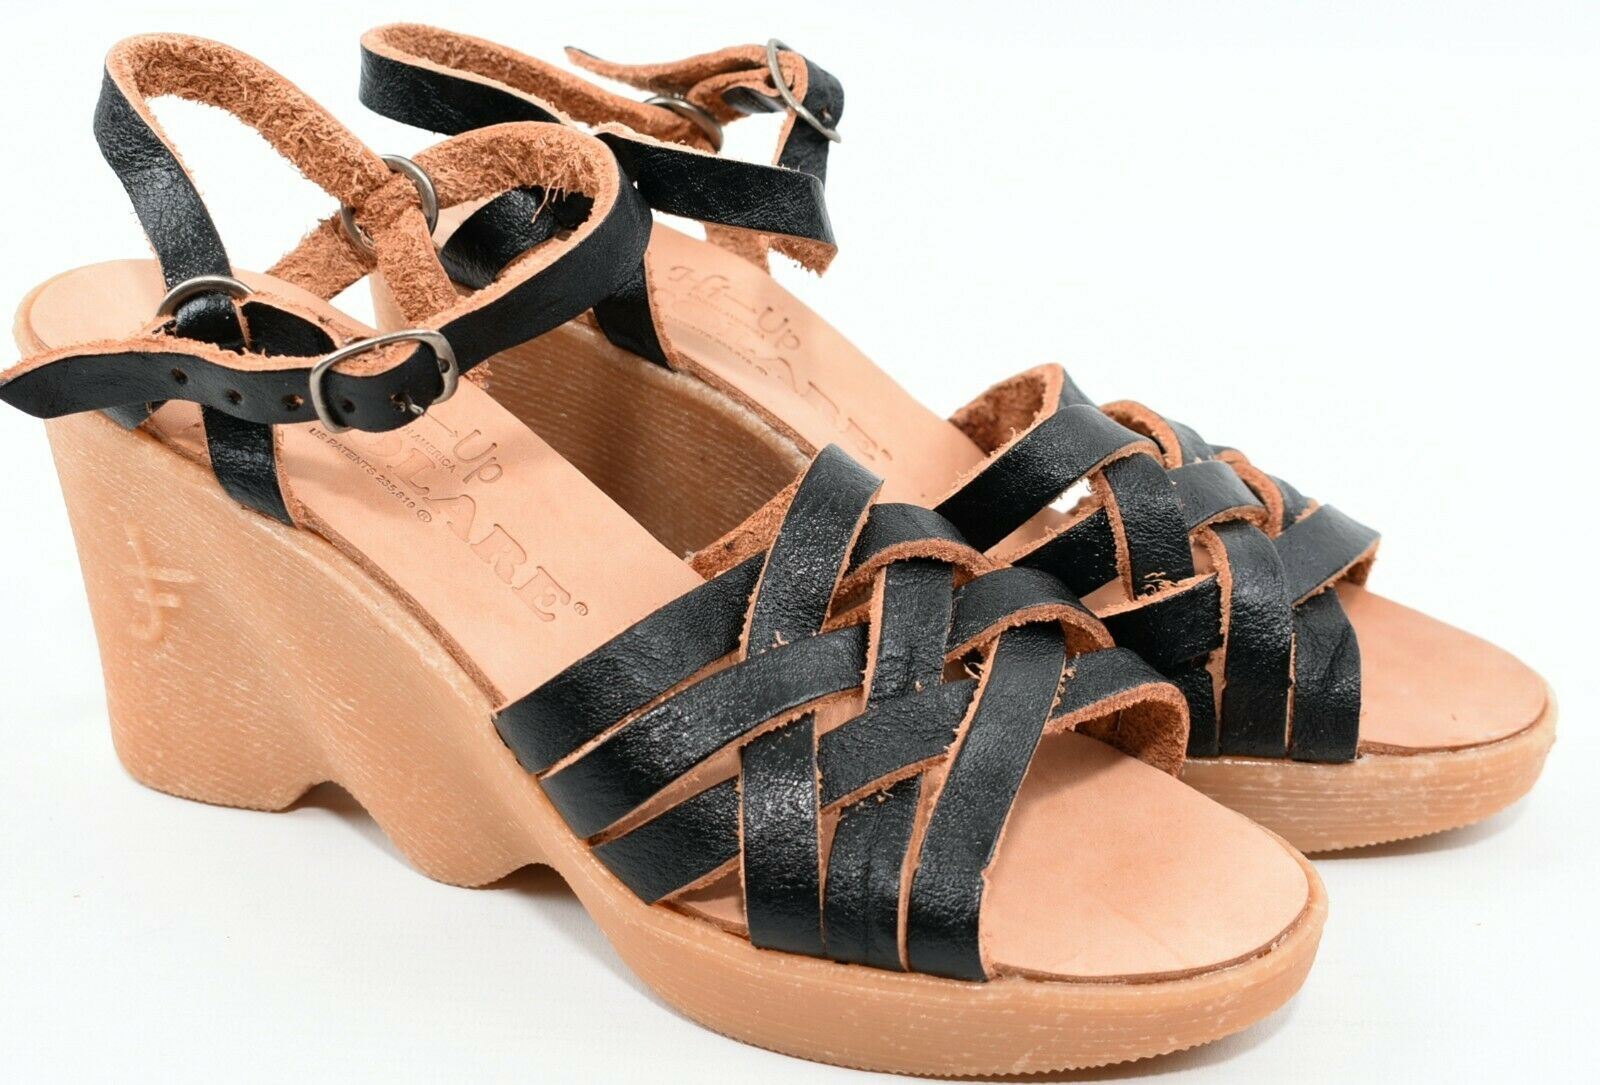 FAMOLARE Women's Black Genuine Leather Wedge Sandals, size UK 4.5